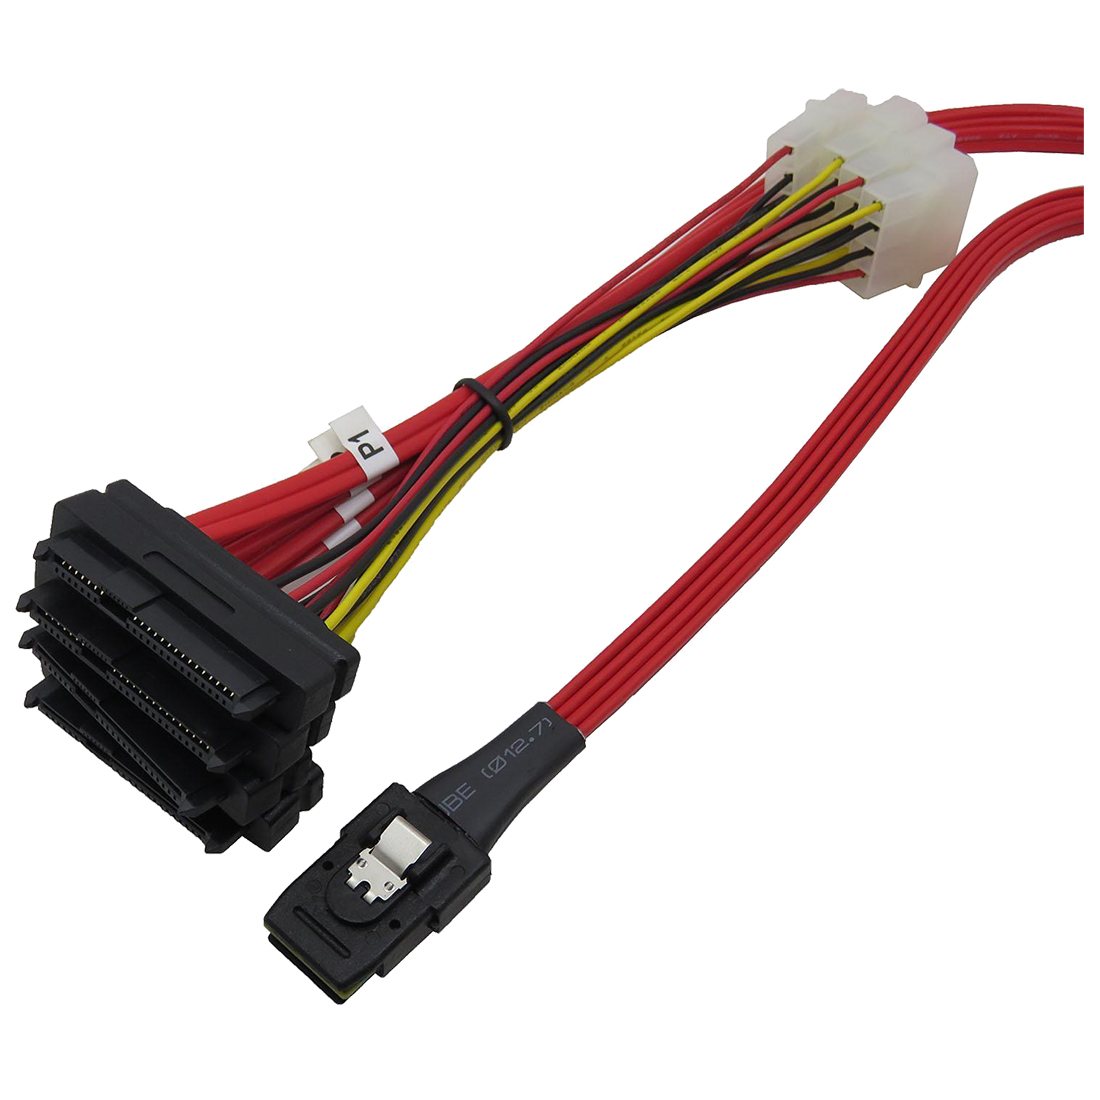 Mini SAS 36P SFF8087 to 4 X SFF 8482 29P SAS with Power Red Cable 1M
